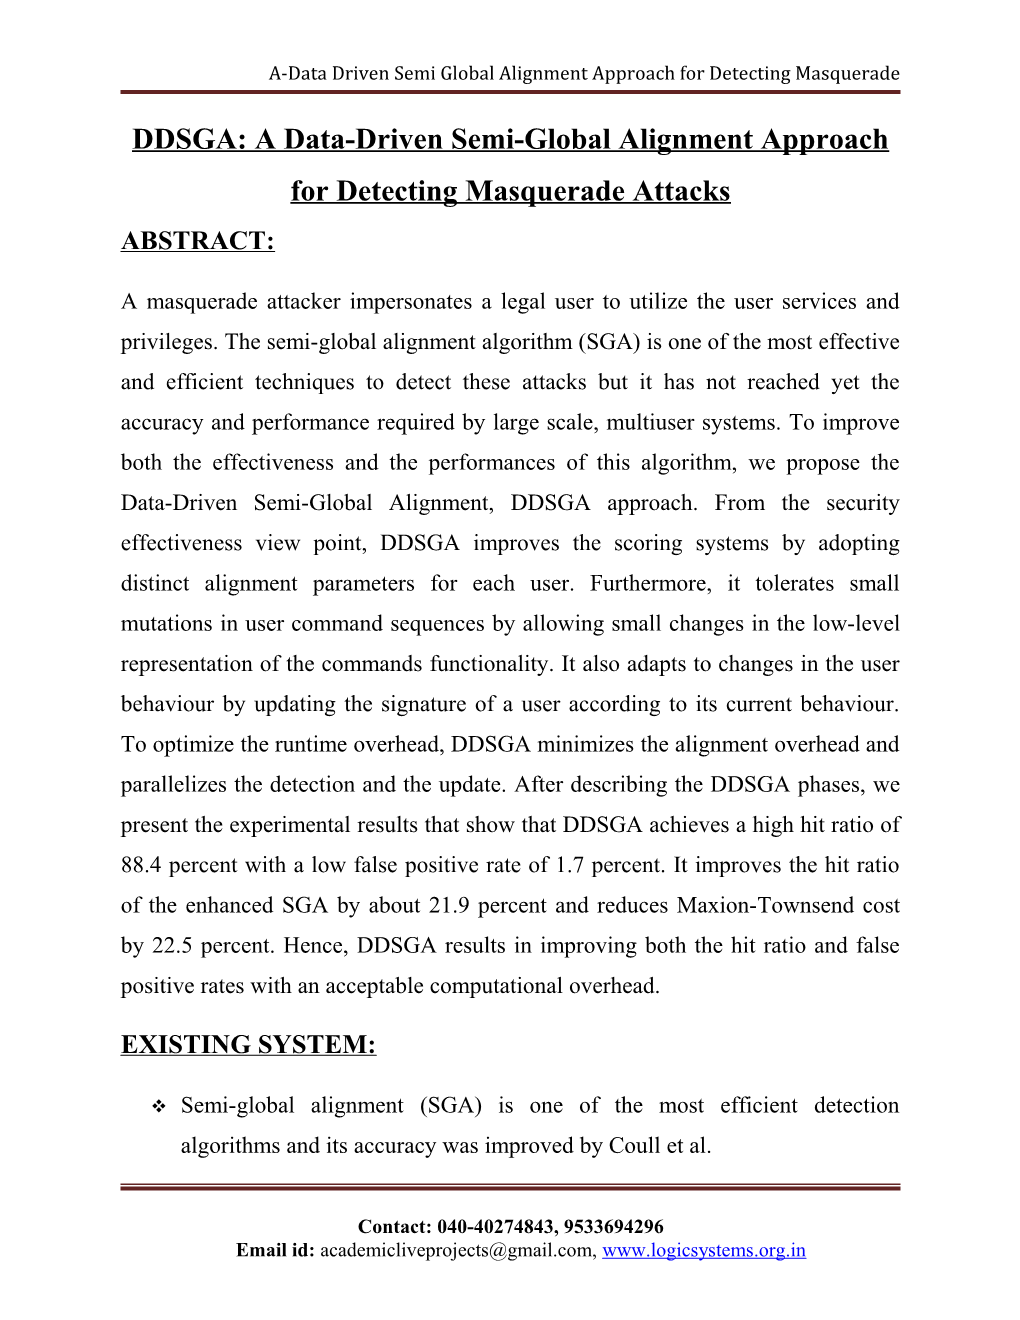 DDSGA: a Data-Driven Semi-Global Alignmentapproach for Detecting Masquerade Attacks